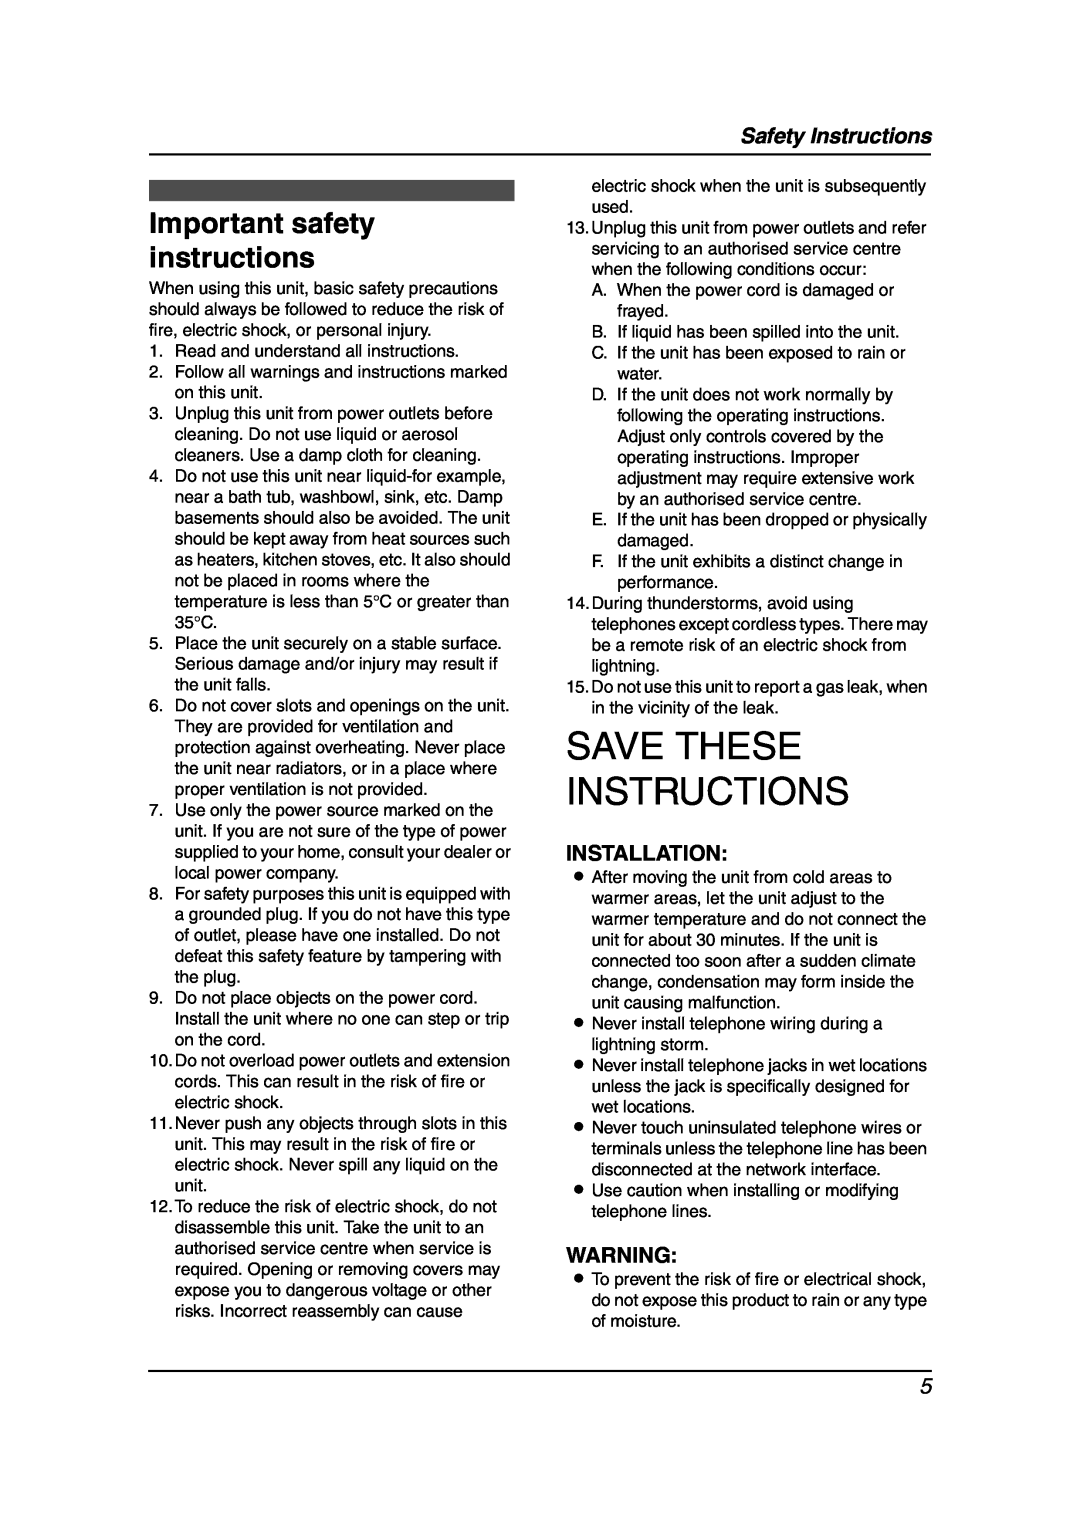 Panasonic KX-FL511AL manual Important safety instructions, Save These Instructions, Safety Instructions, Installation 